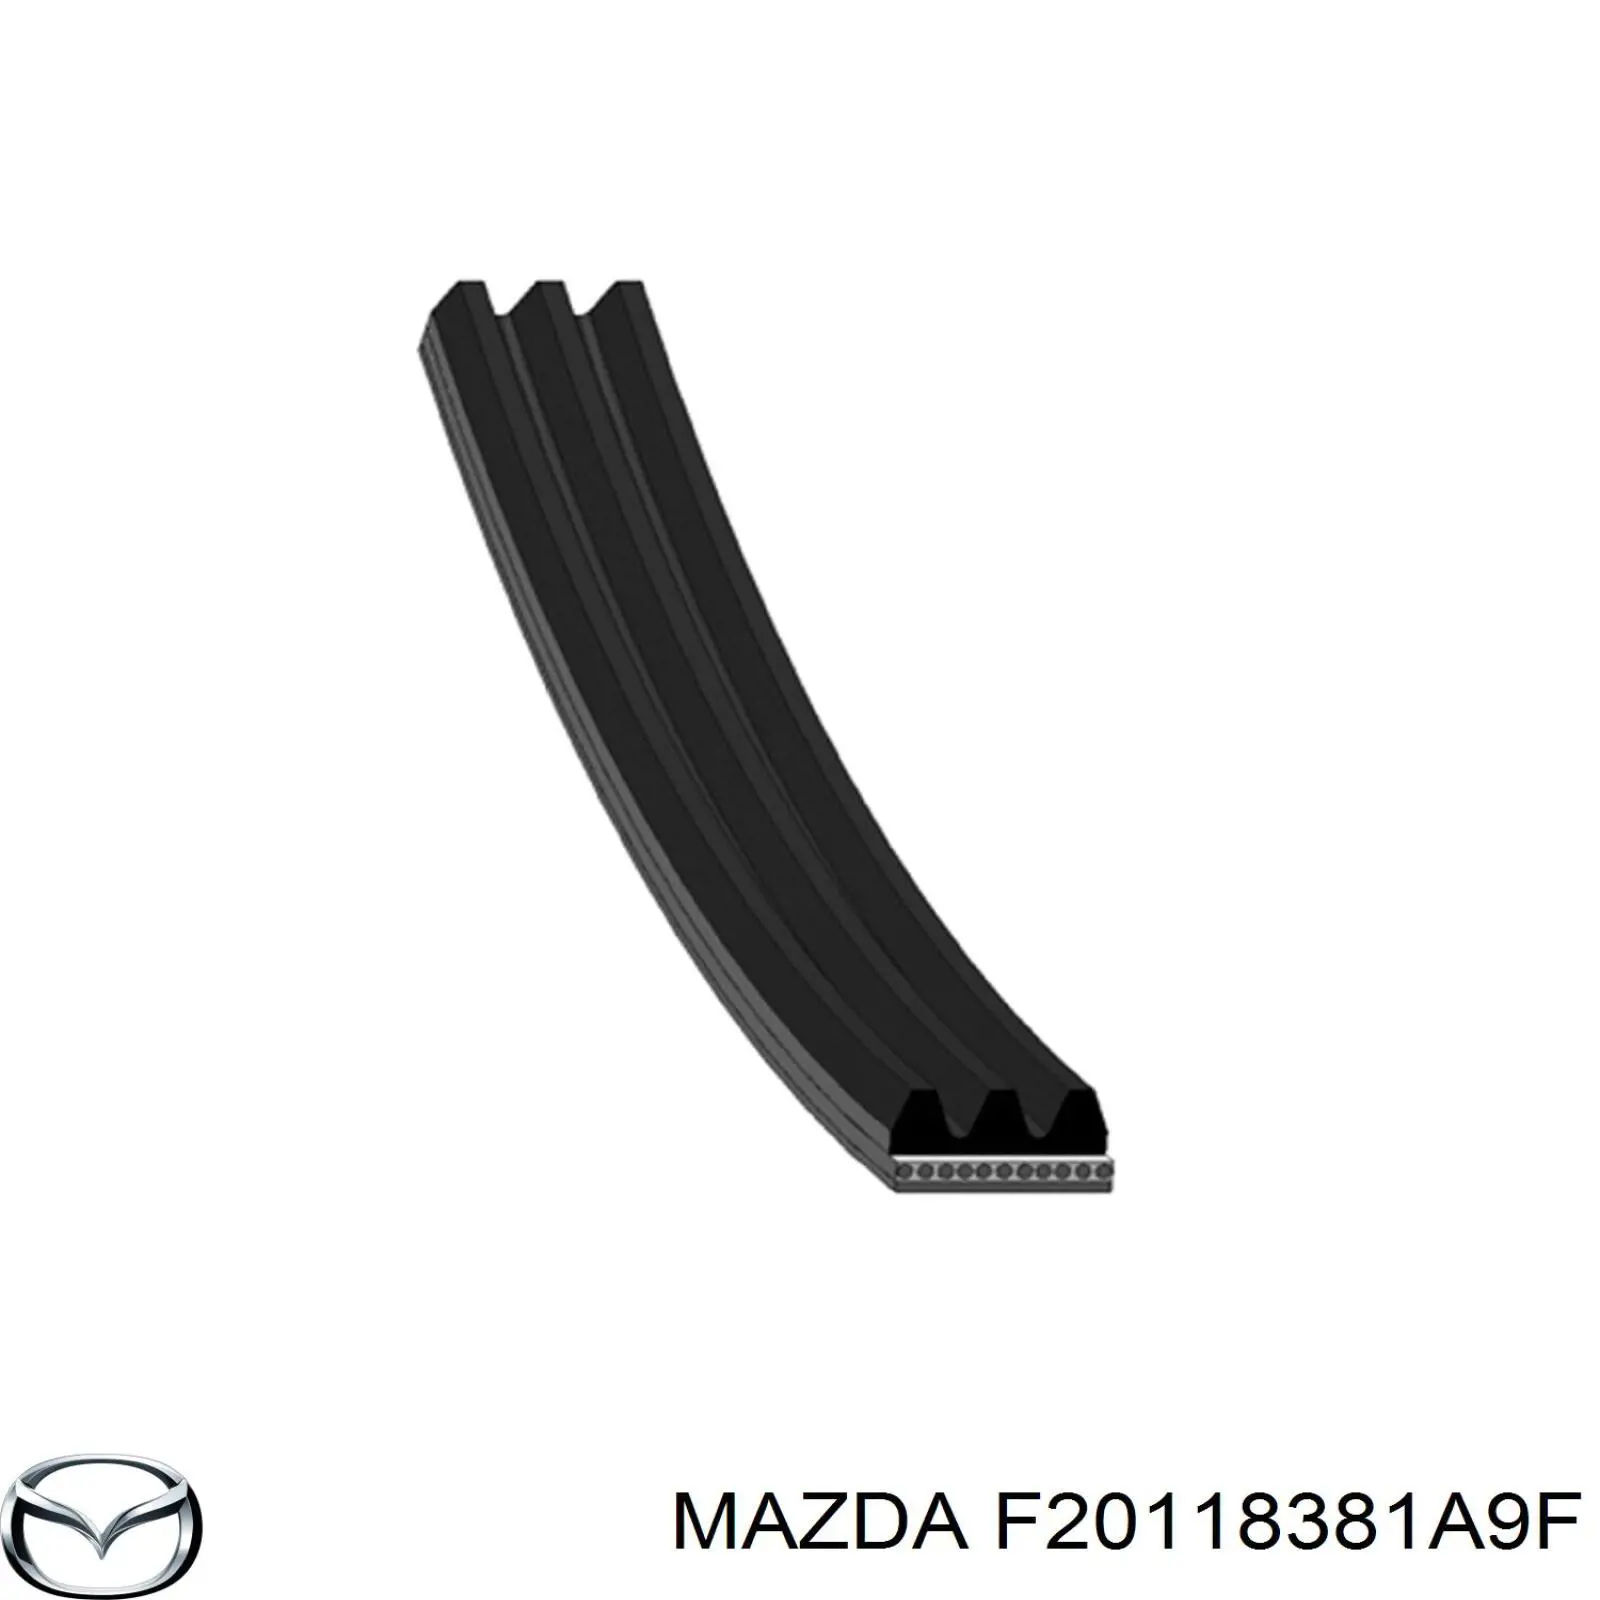 F20118381A9F Mazda correa trapezoidal